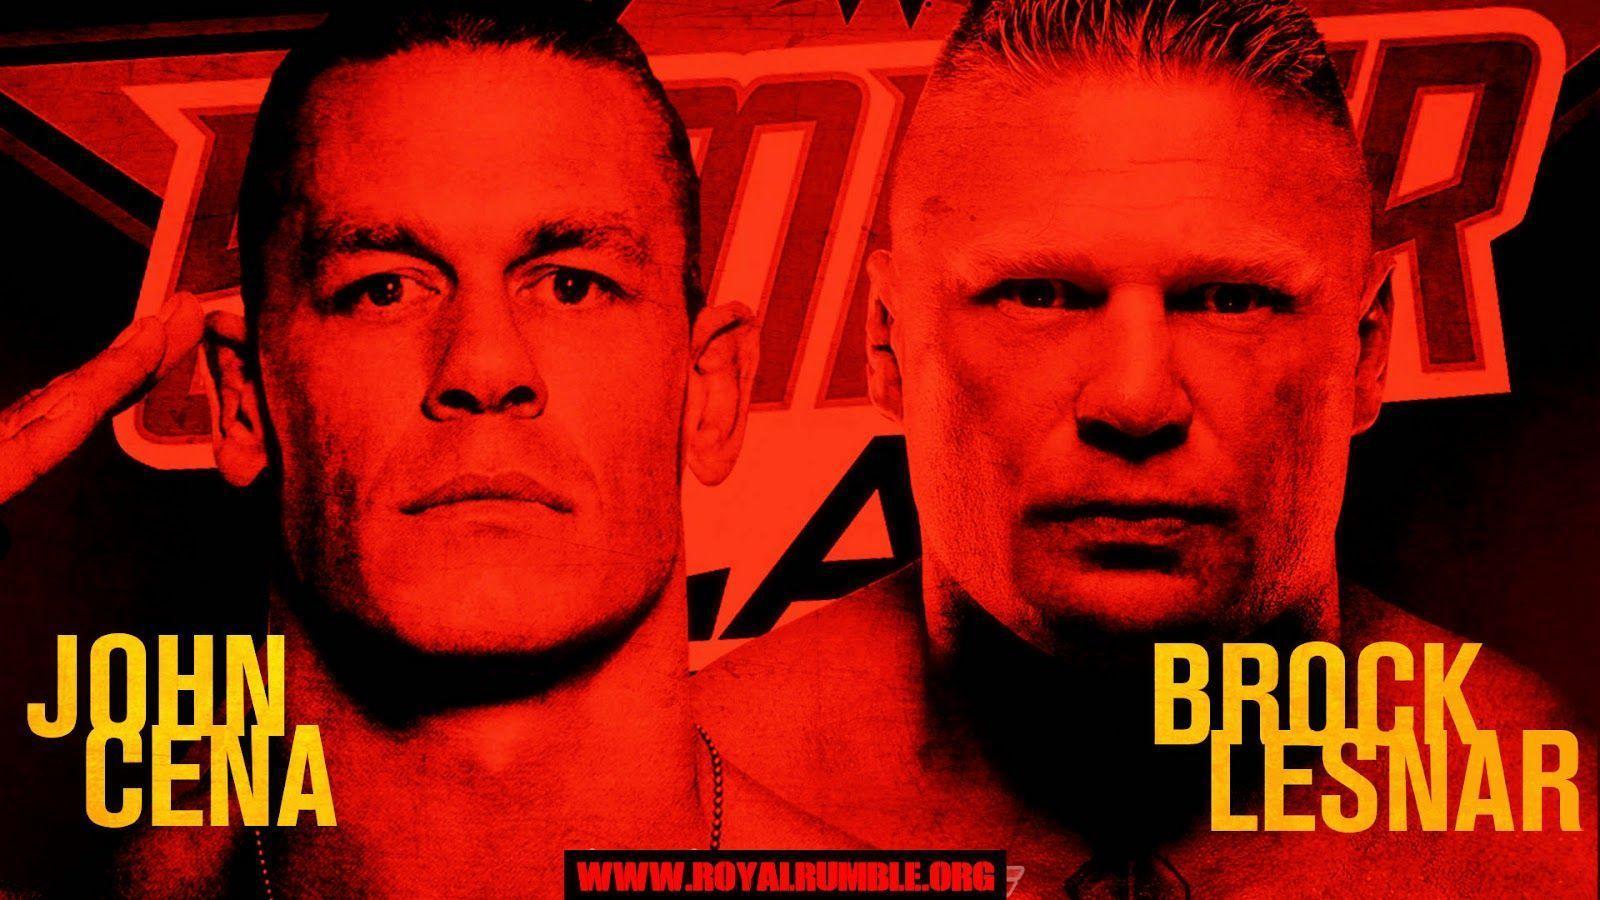 John Cena vs Brock Lesnar Wallpaper image